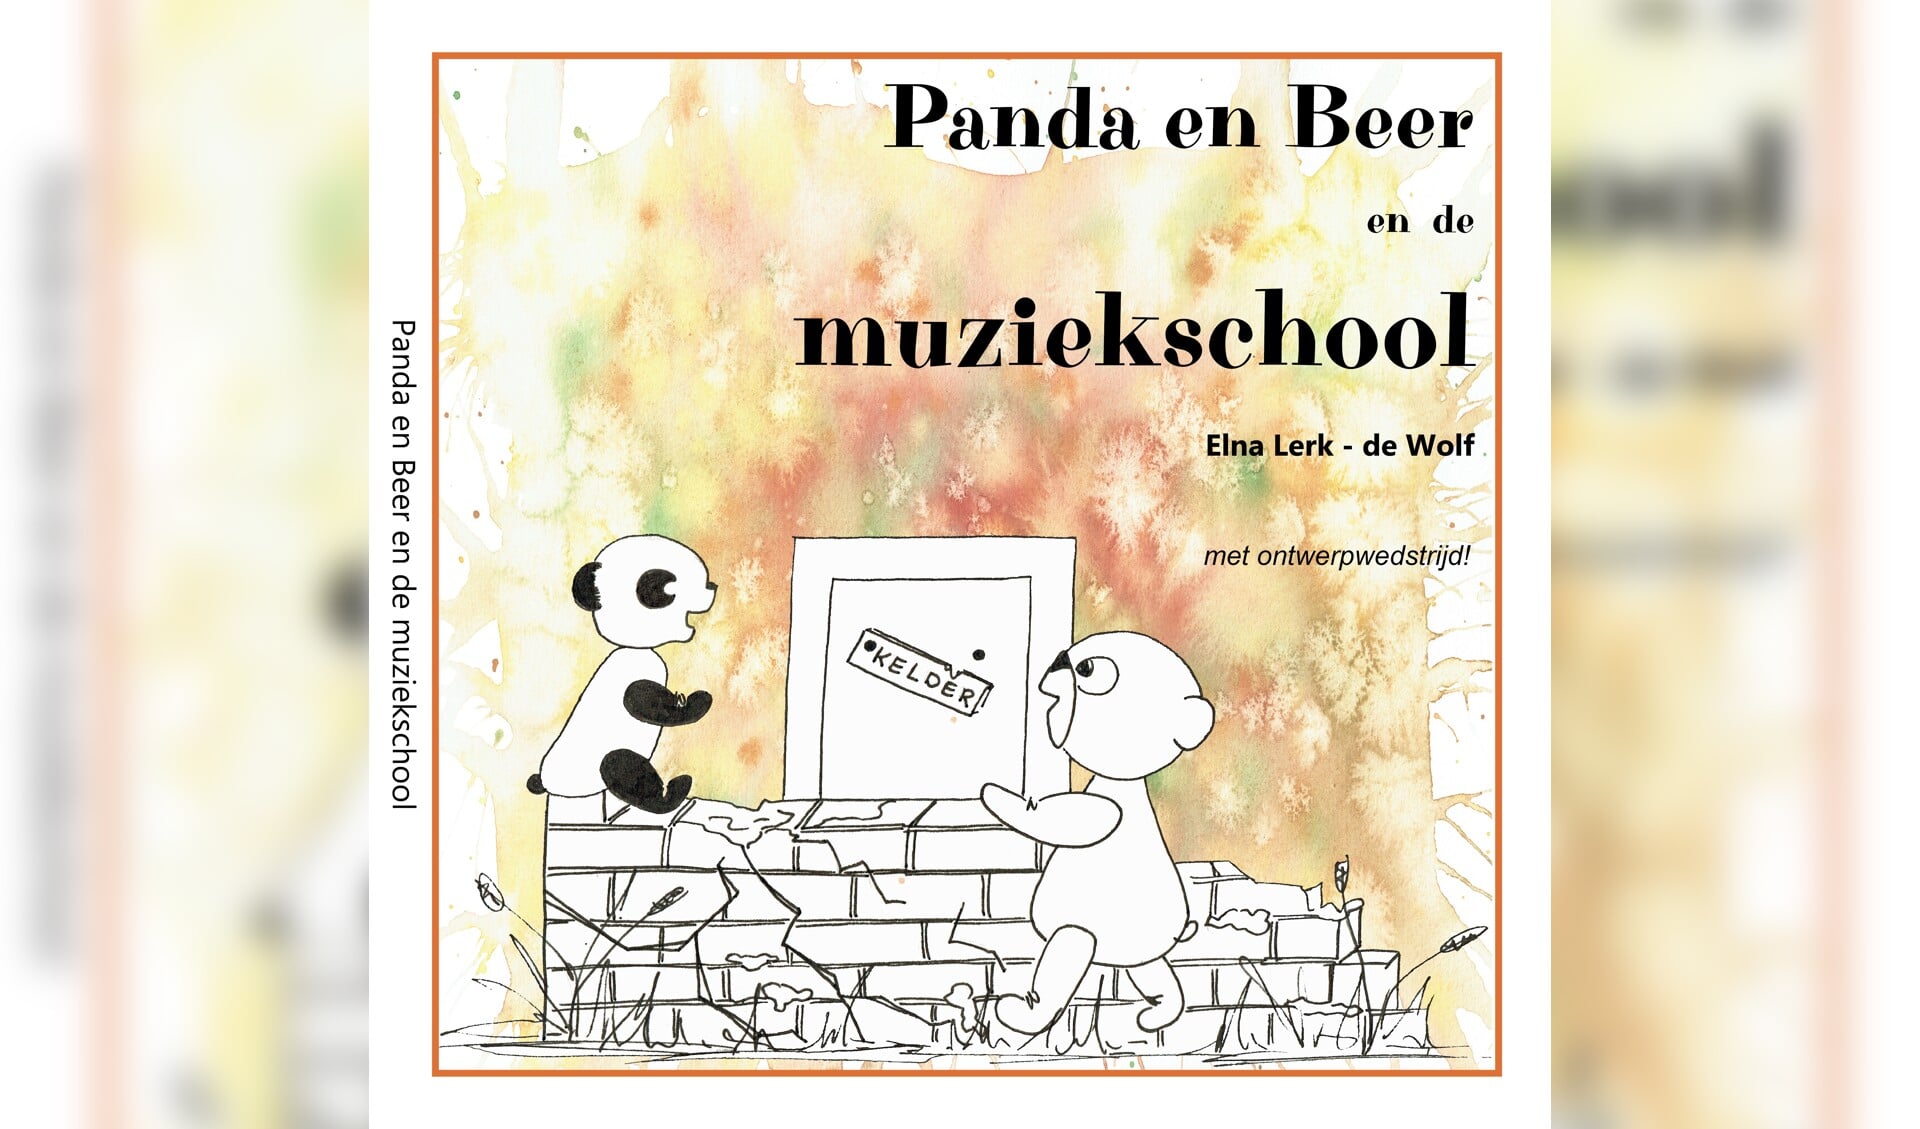 Omslag van het nieuwe Panda en Beer boekje